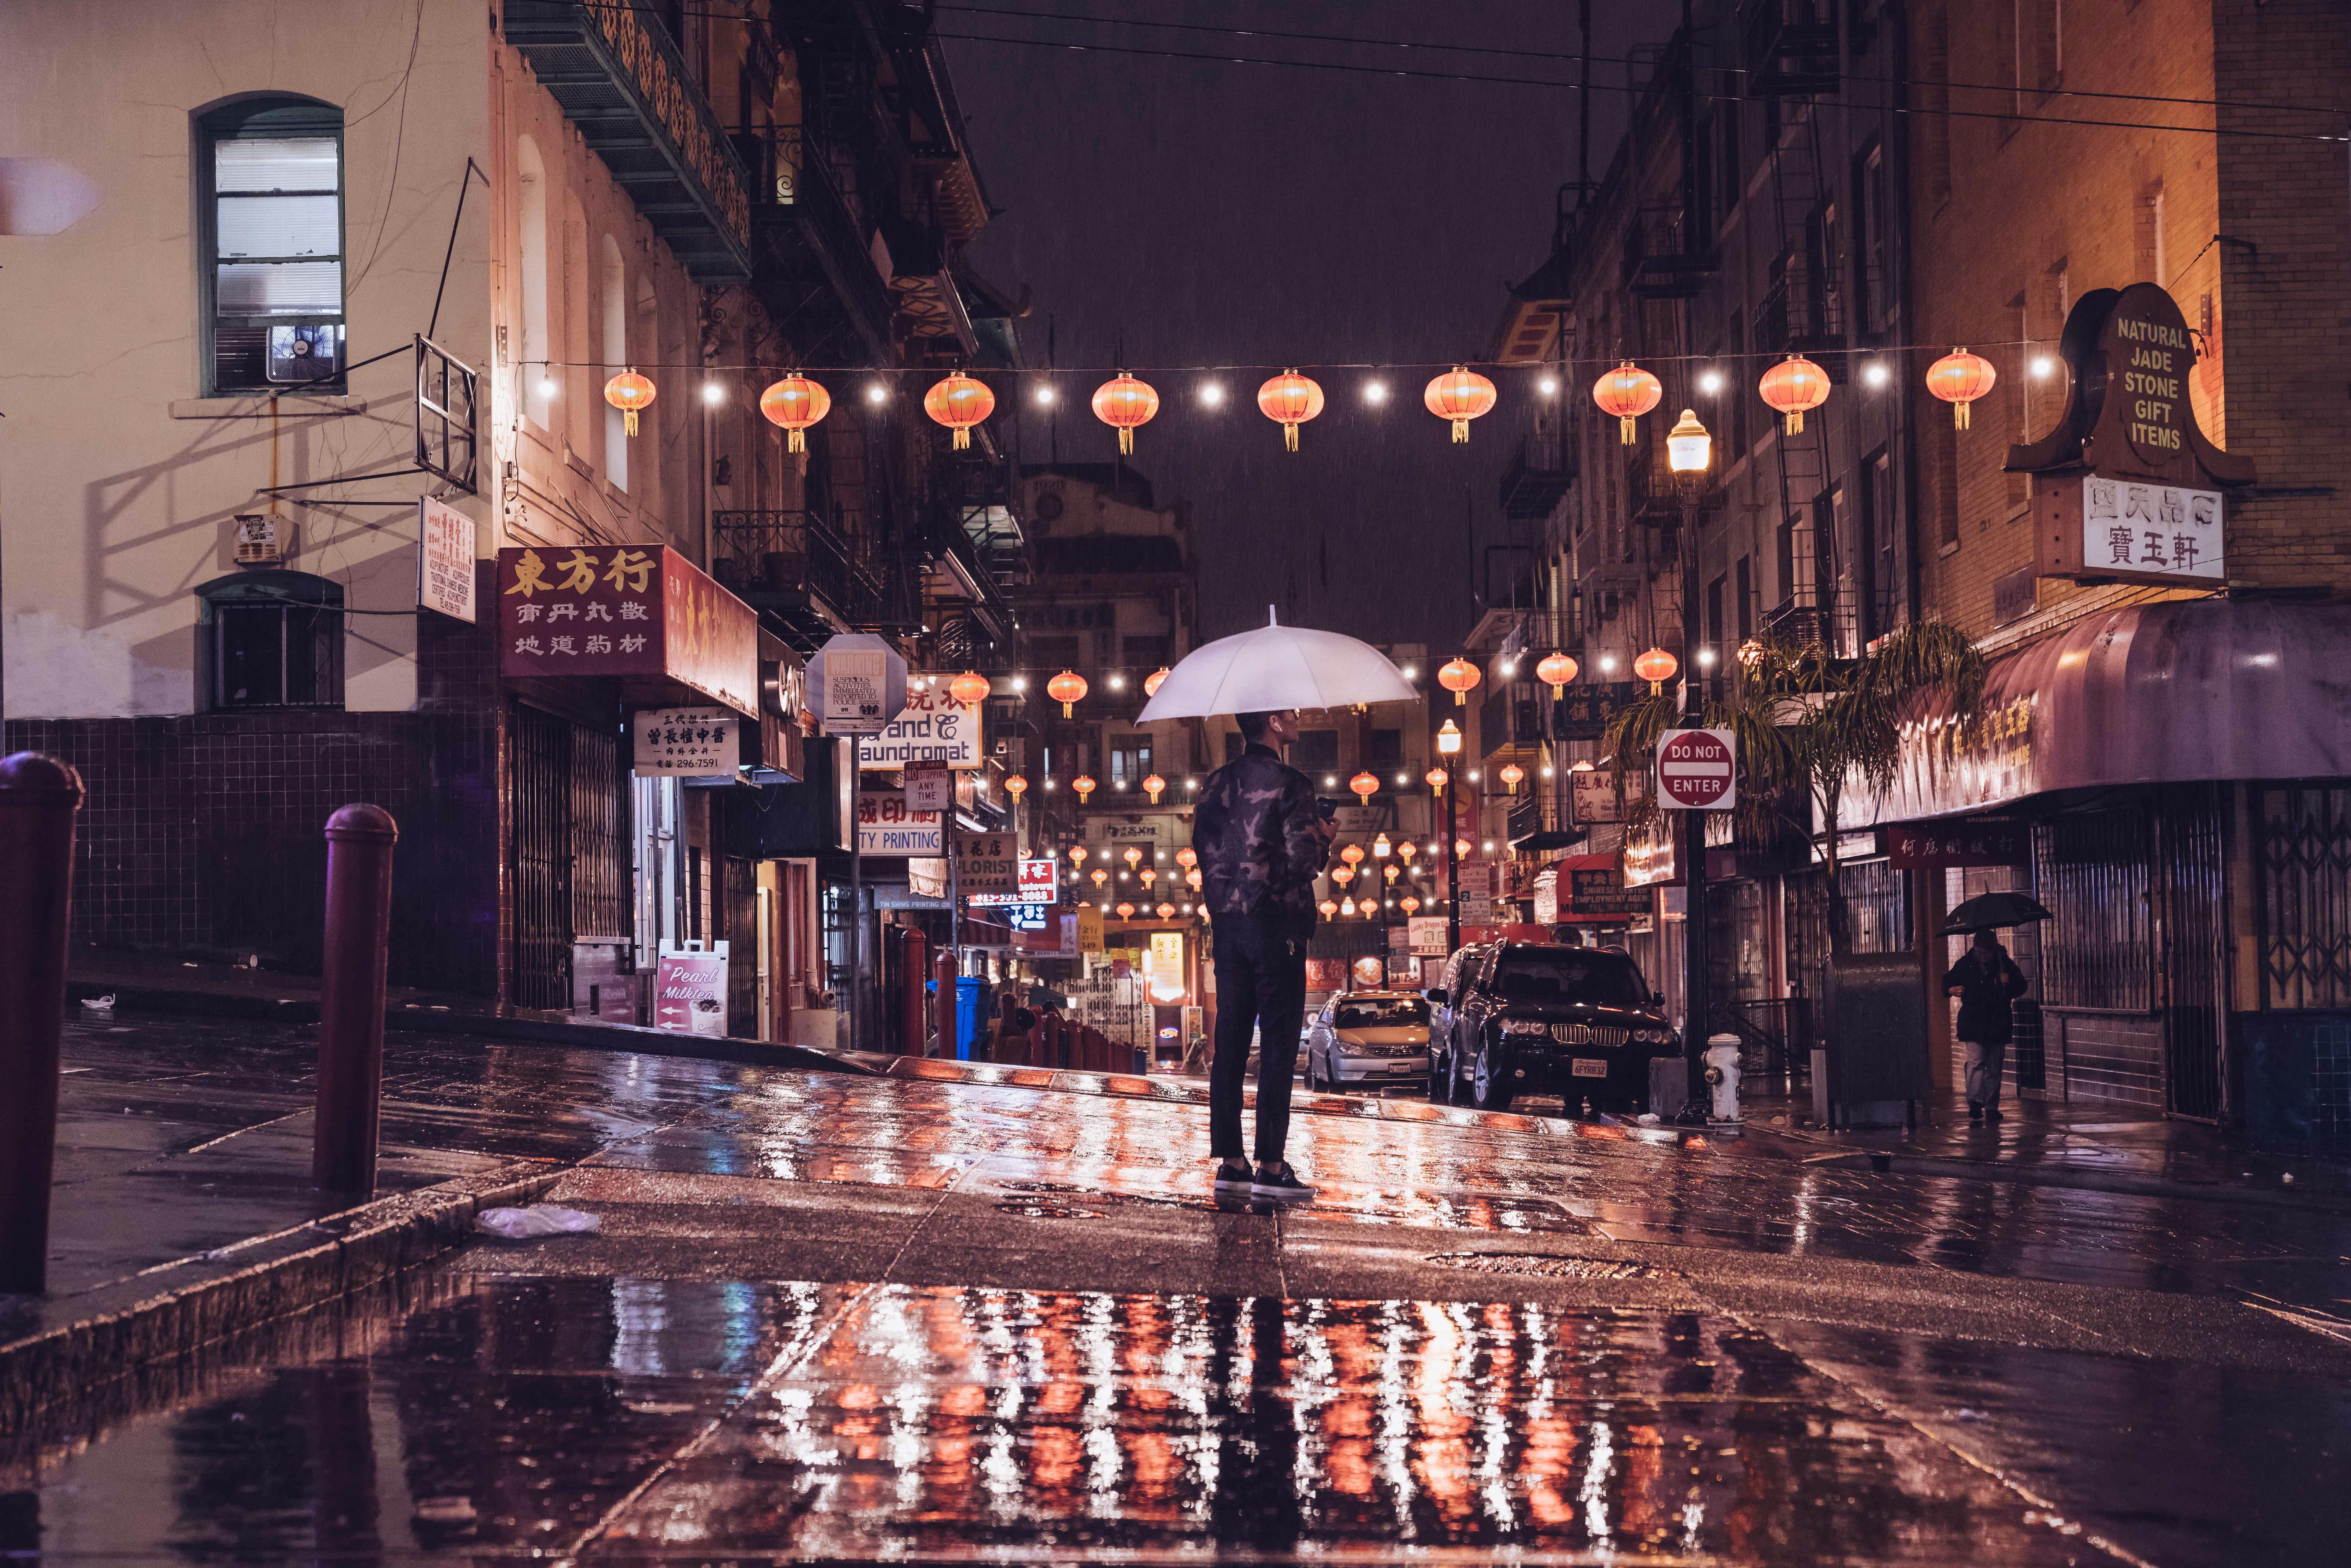 Louis Vuitton Umbrella when I walk through the rain